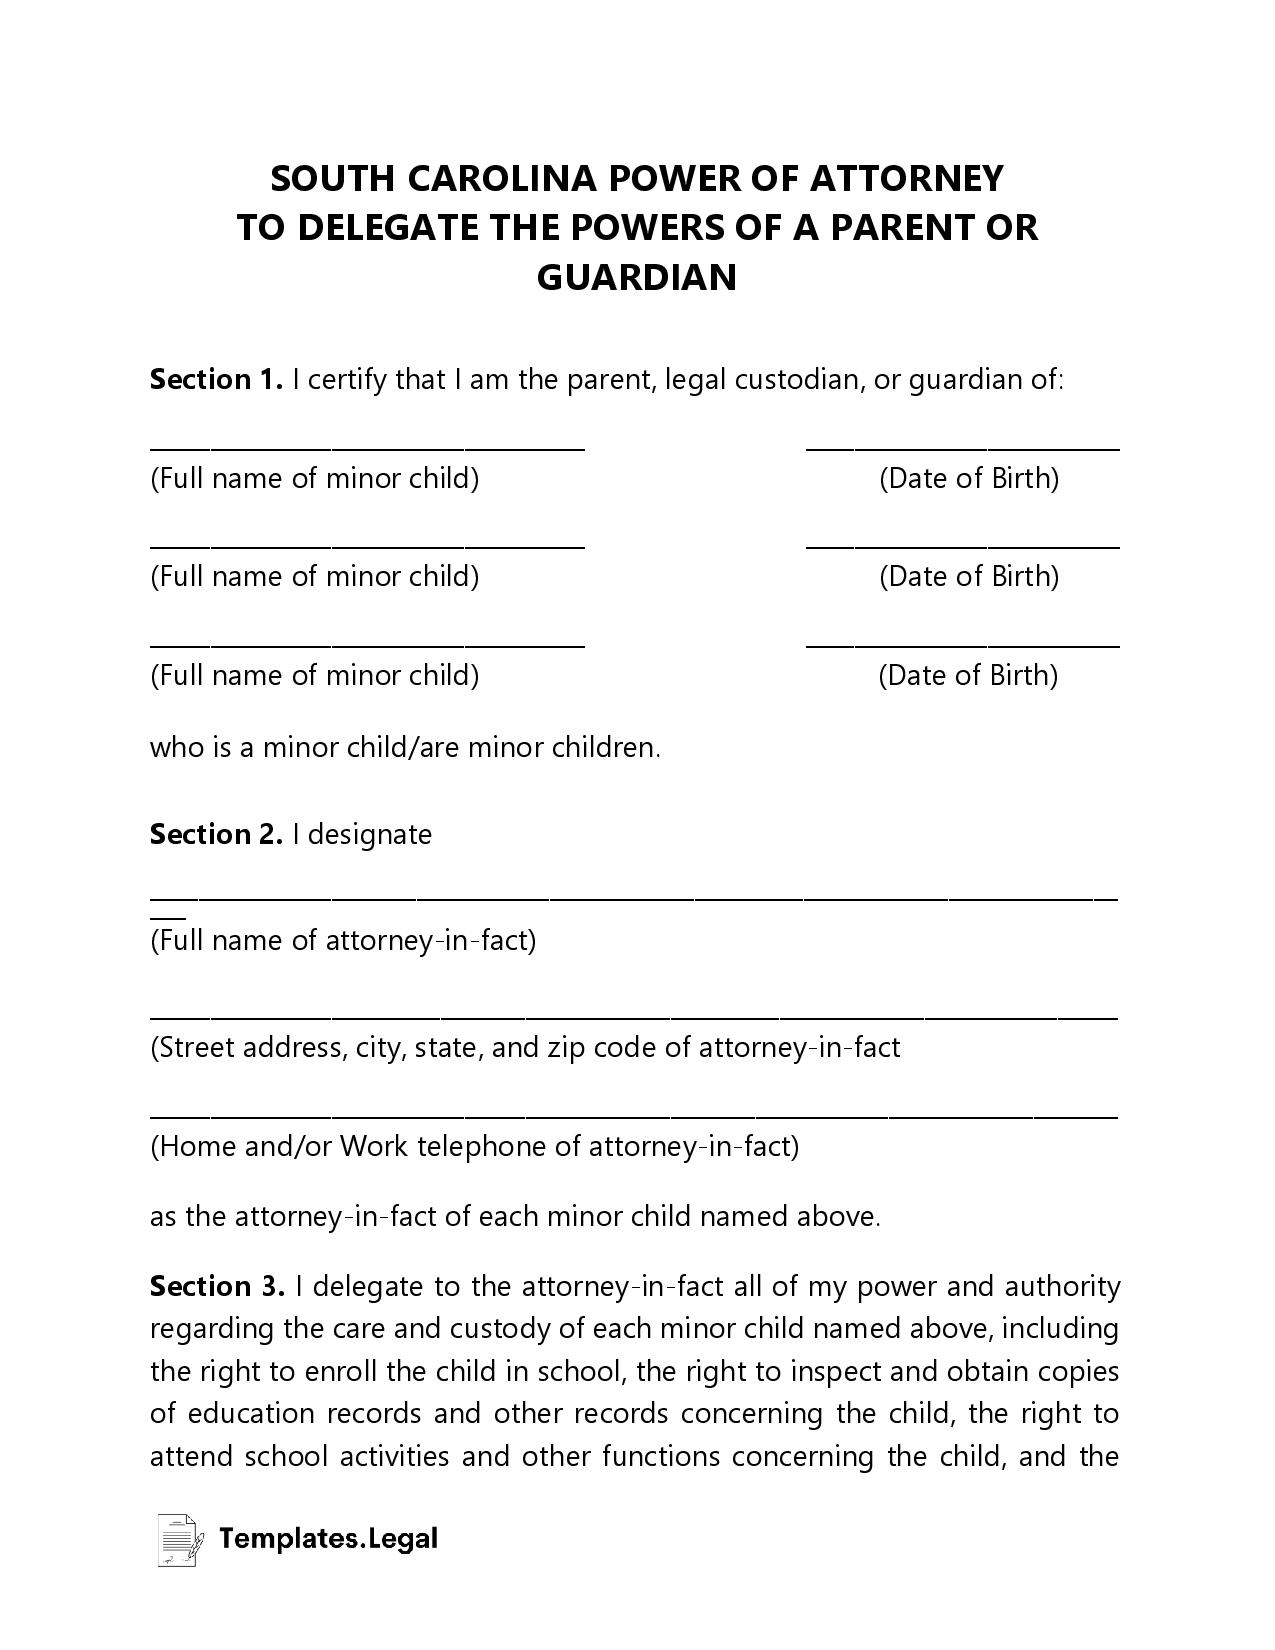 South Carolina Minor (Child) Power of Attorney - Templates.Legal